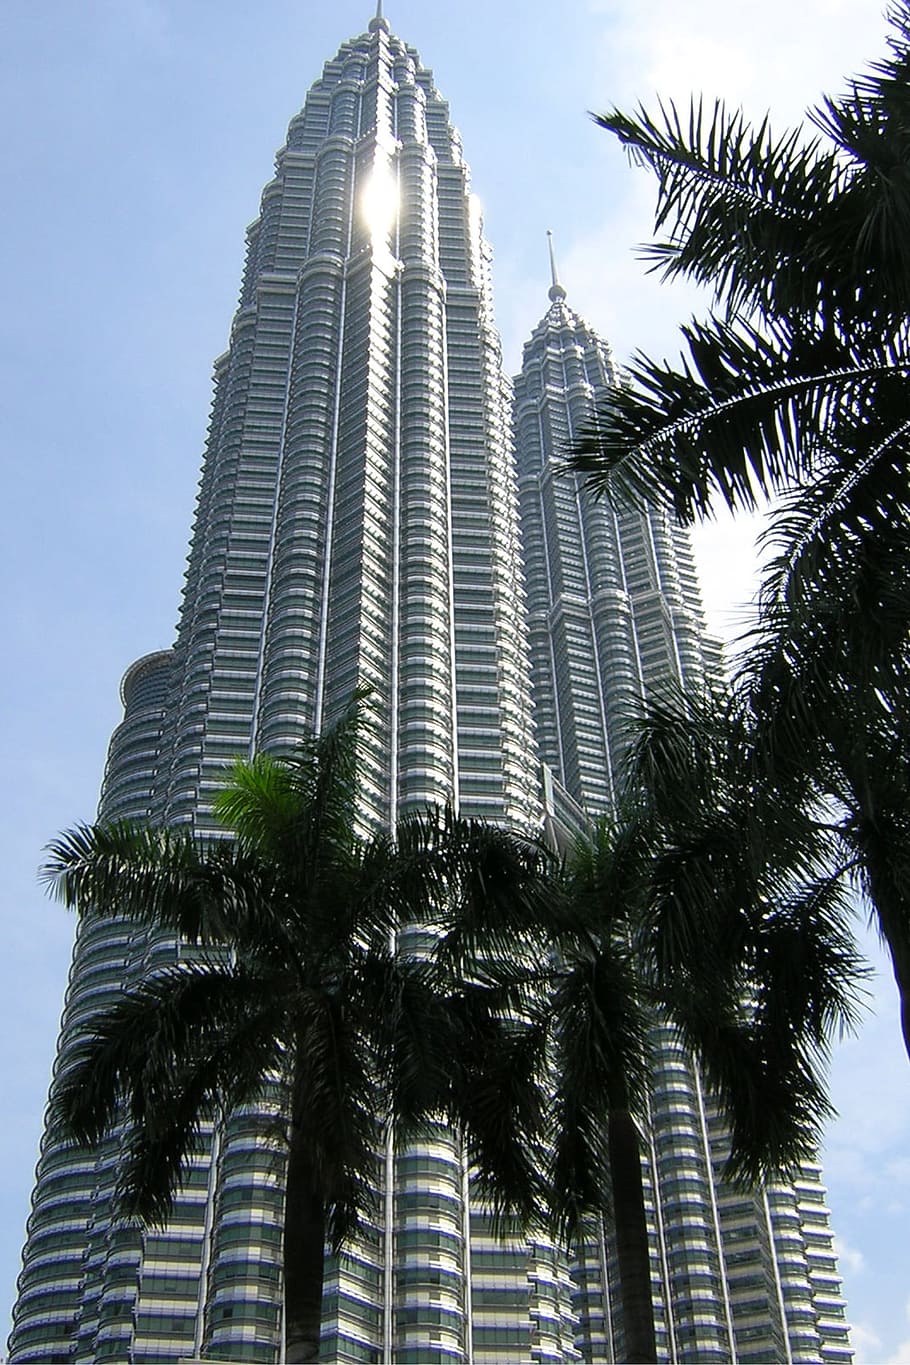 torres petronas, torres gemelas petronas, menara petronas, menara berkembar petronas, malasia, rascacielos, edificio, asia, kuala lumpur, ciudad